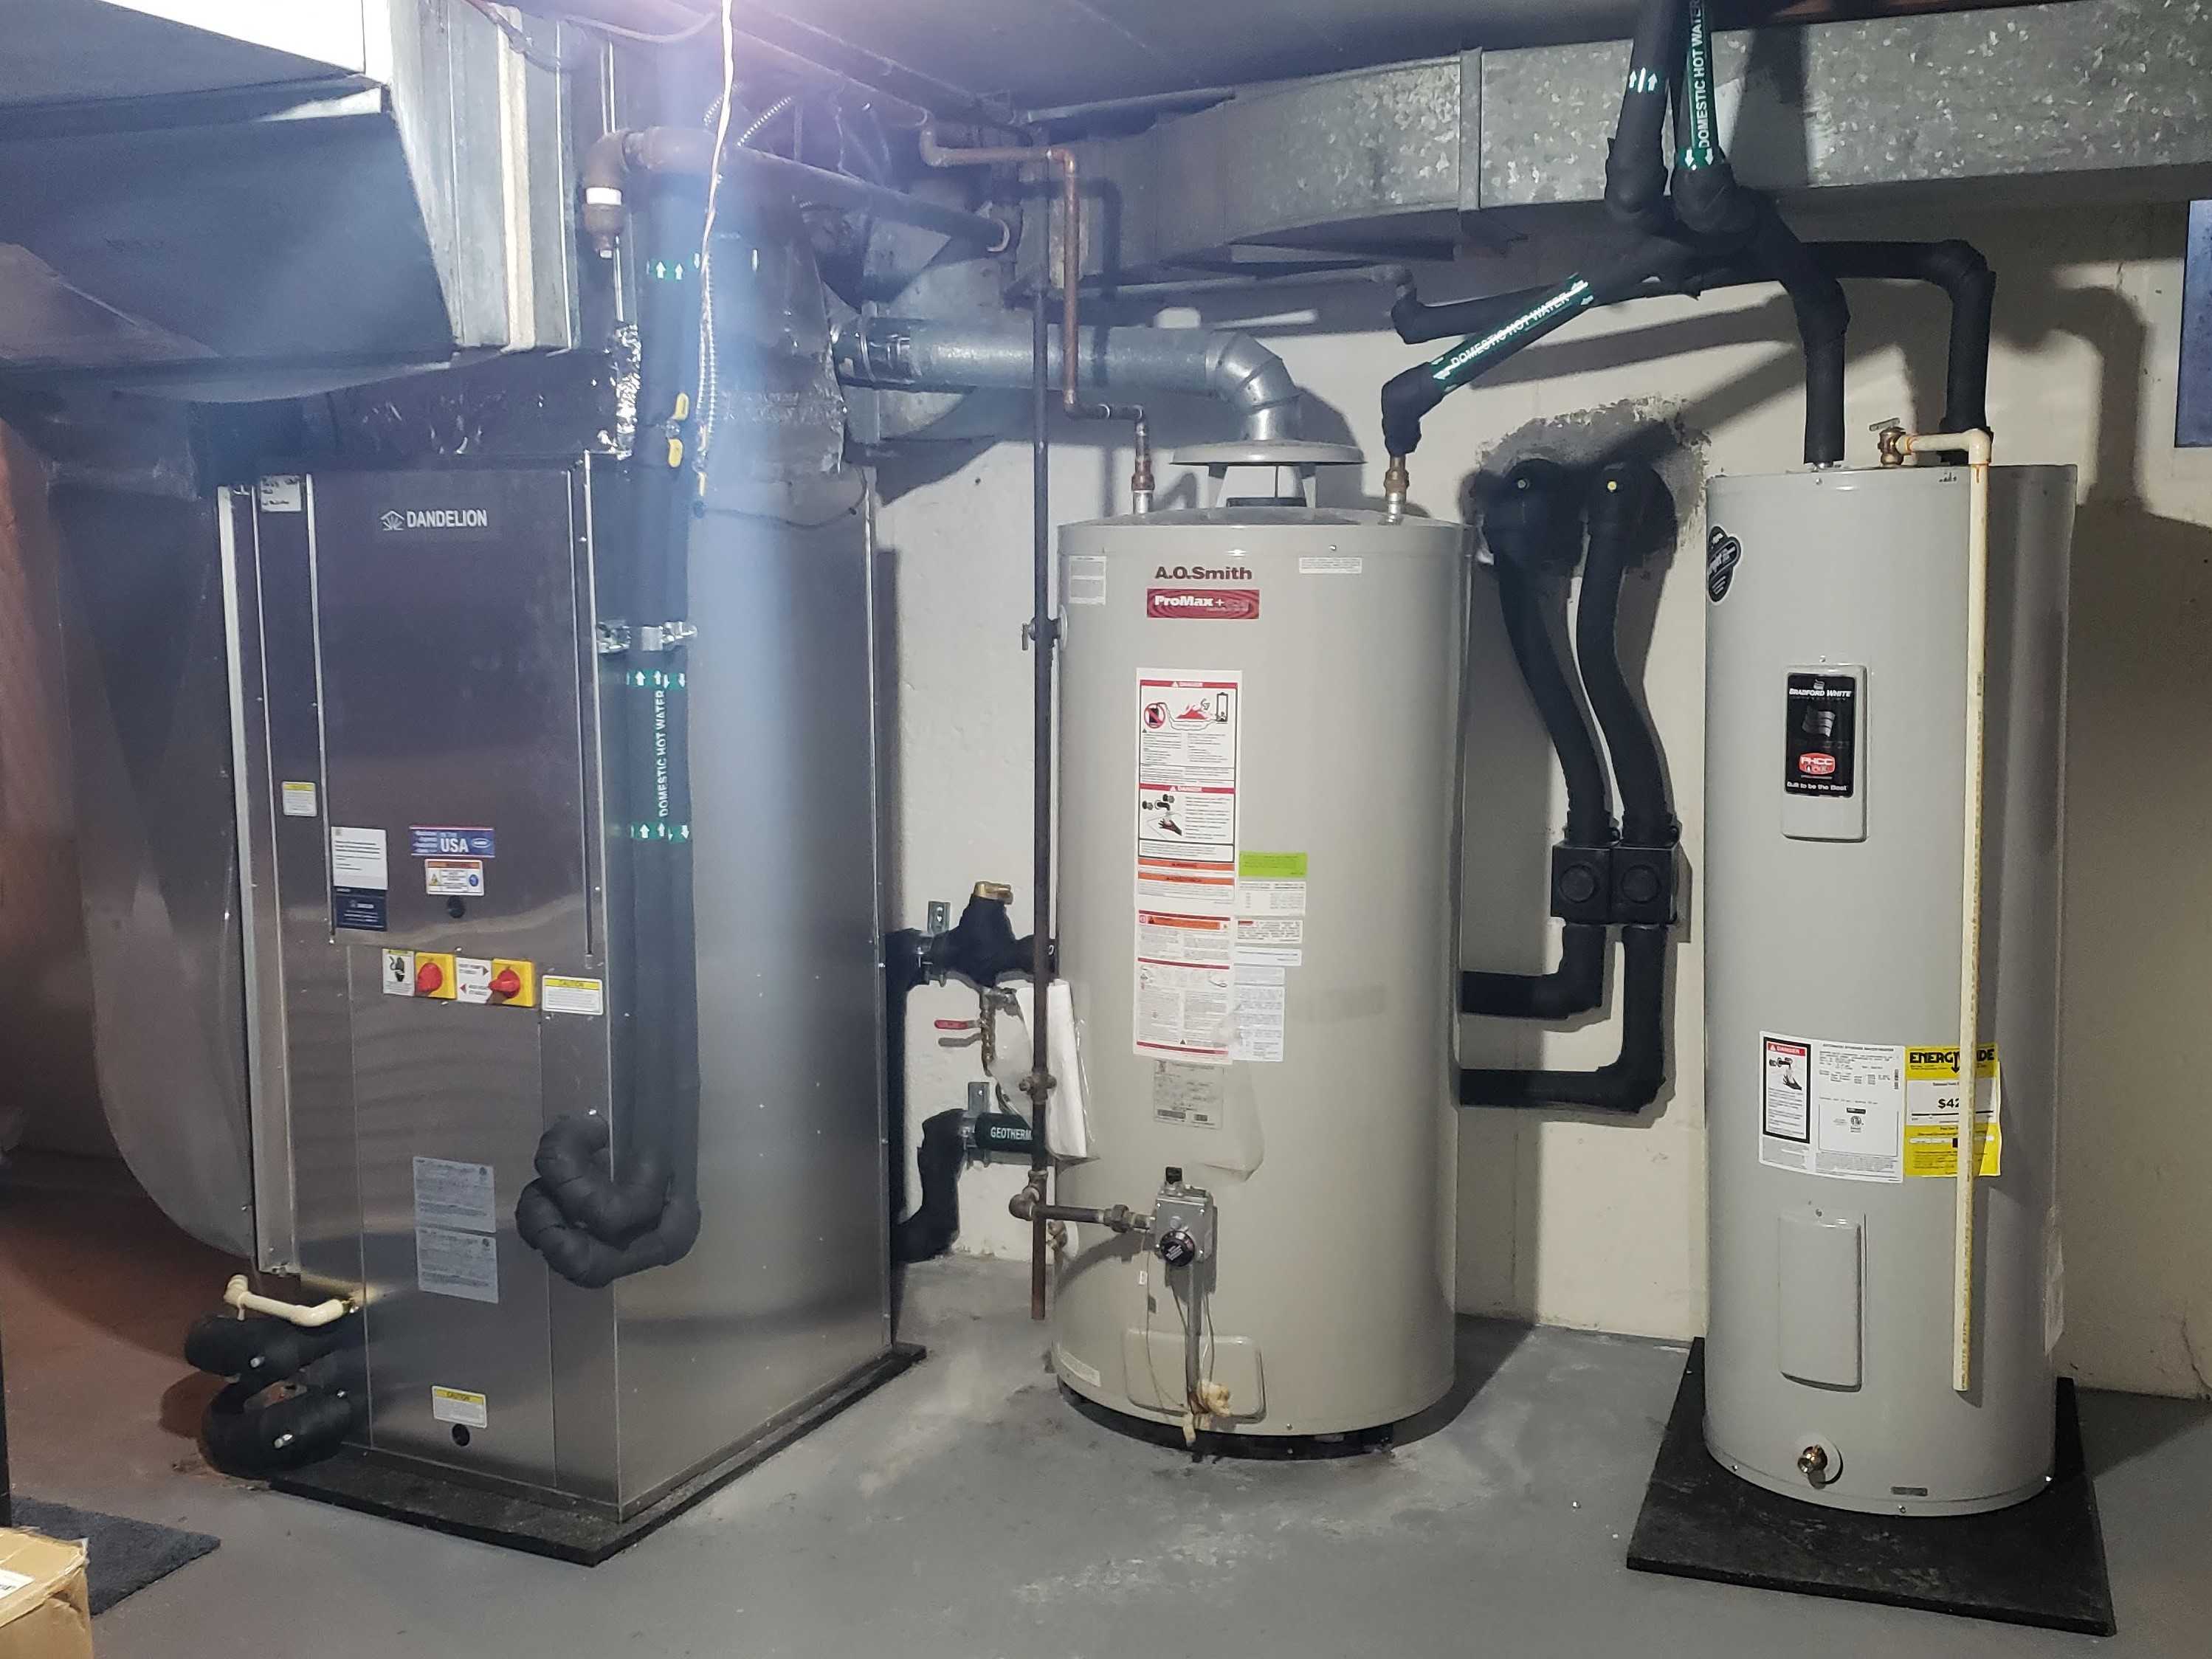 Installed Dandelion Energy geothermal heat pump and desuperheater